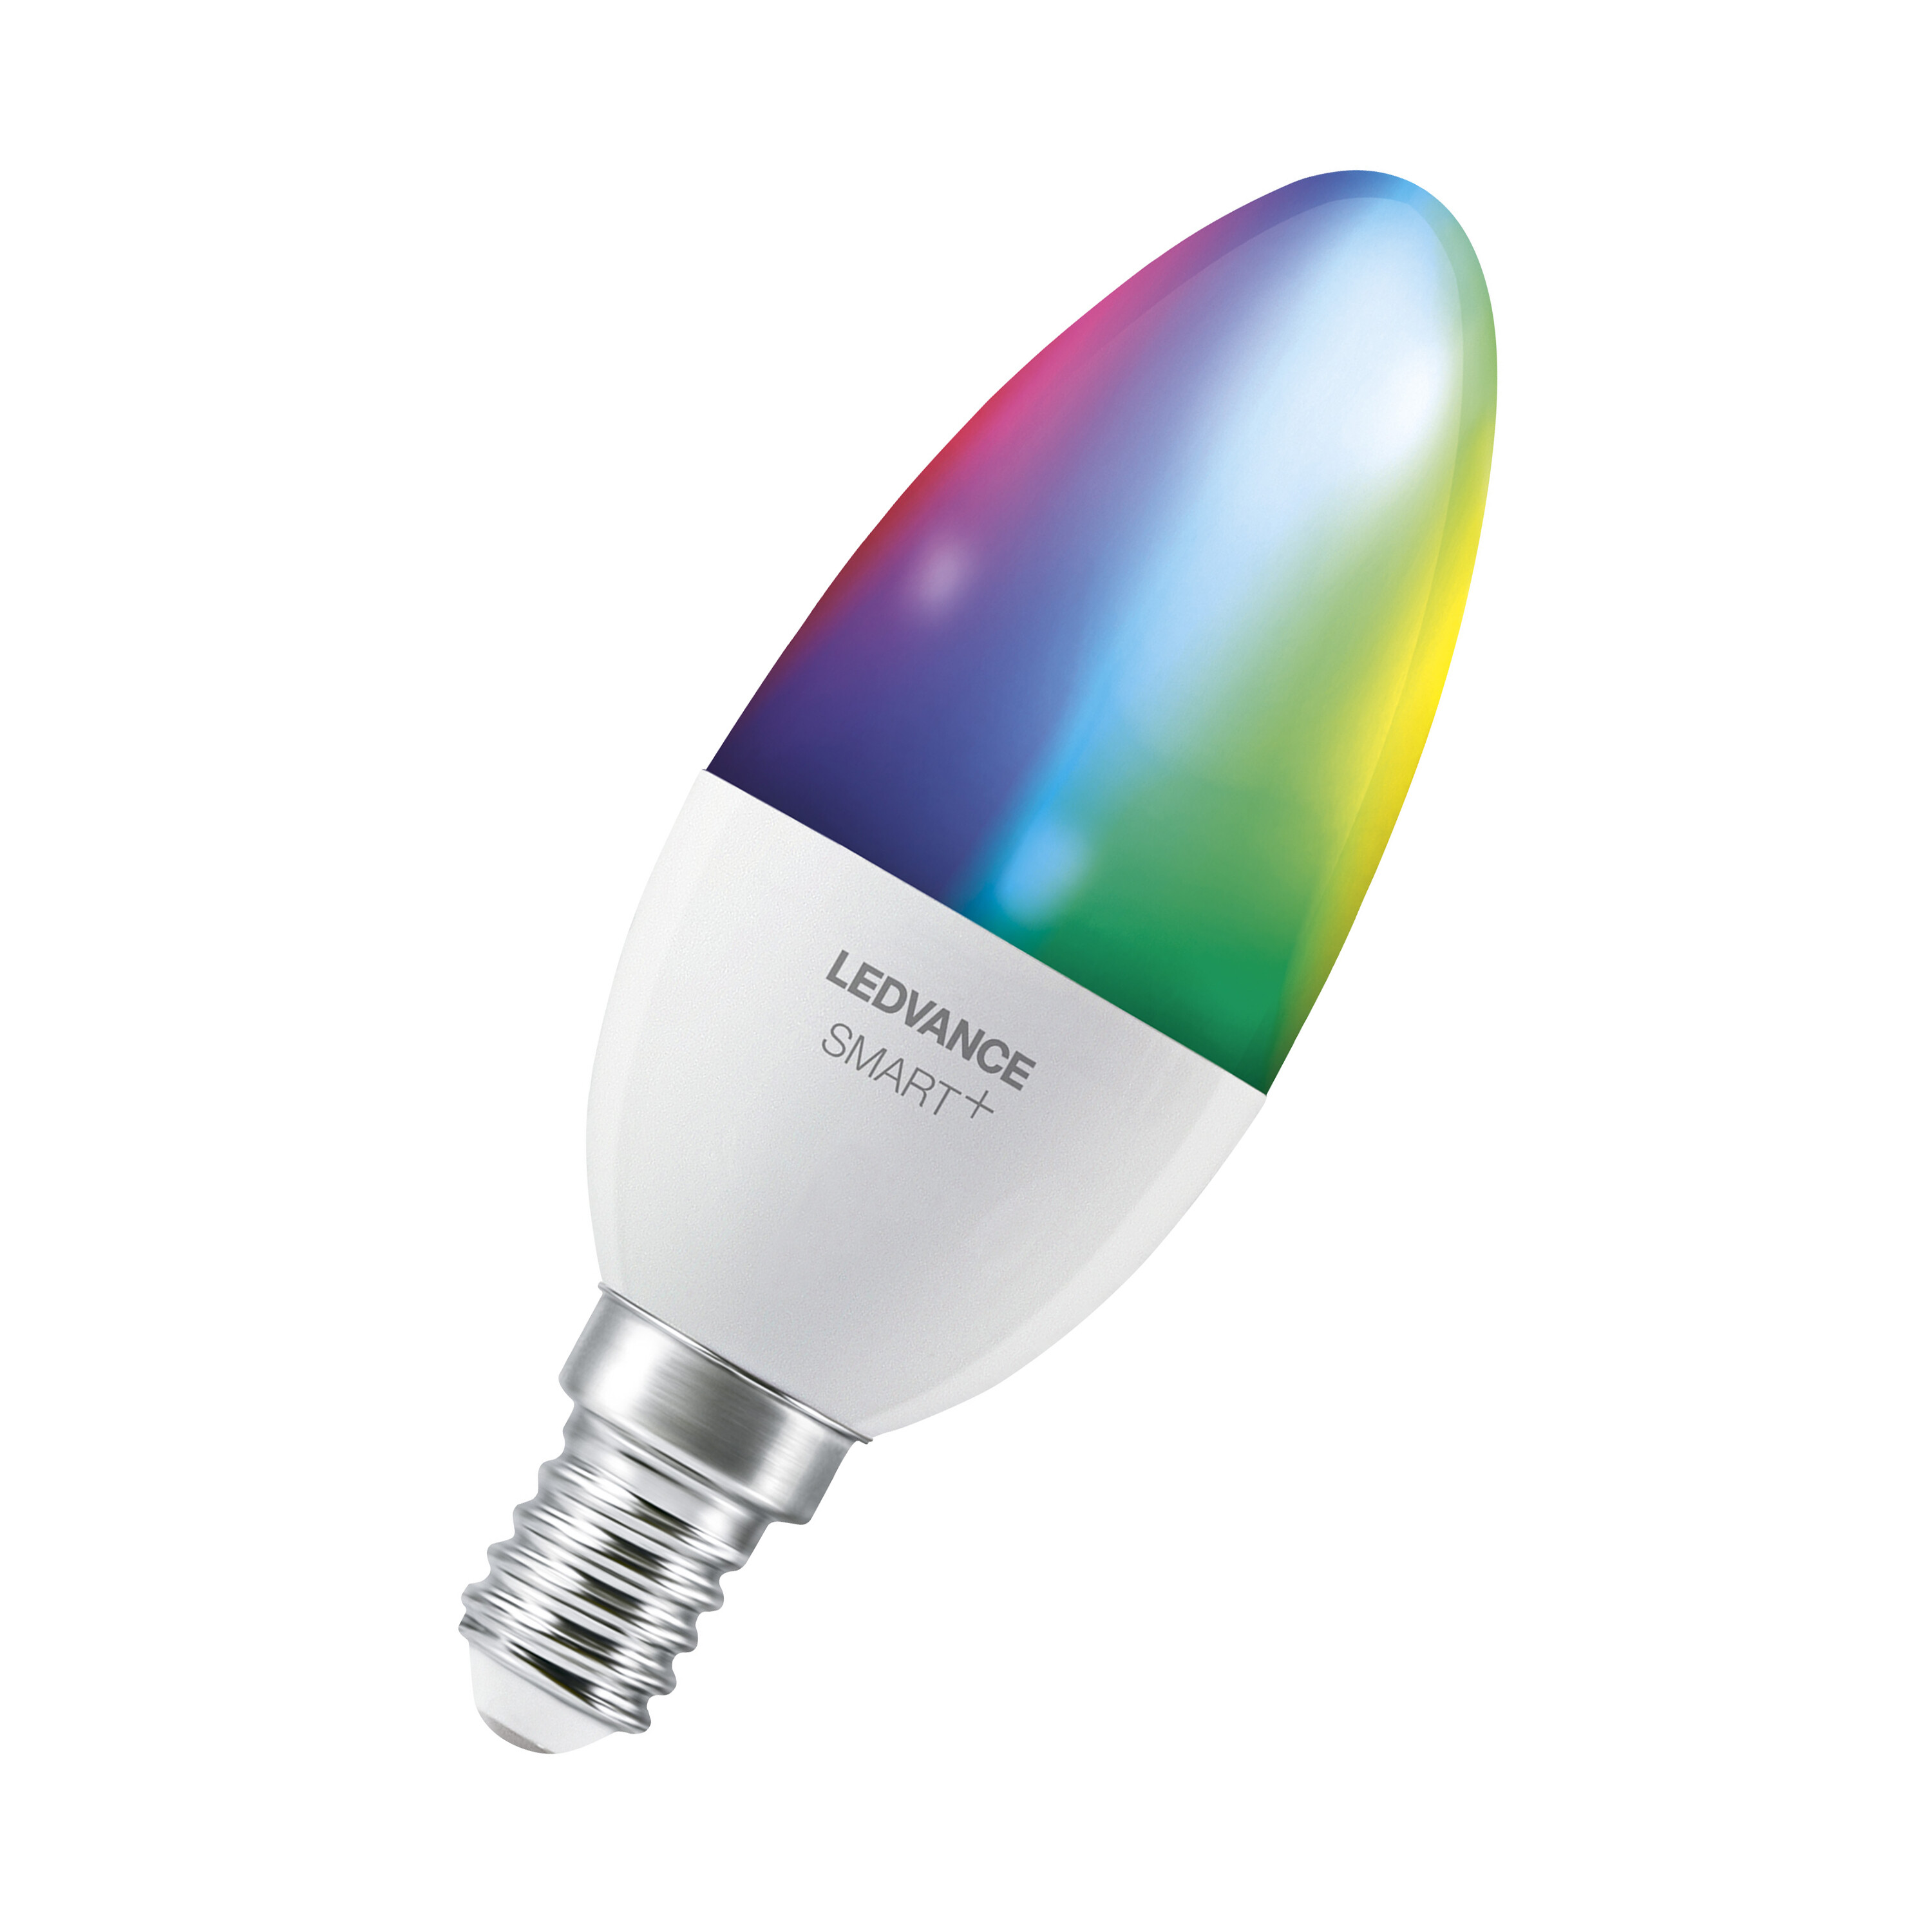 WiFi LED LEDVANCE RGBW Lampe Candle SMART+